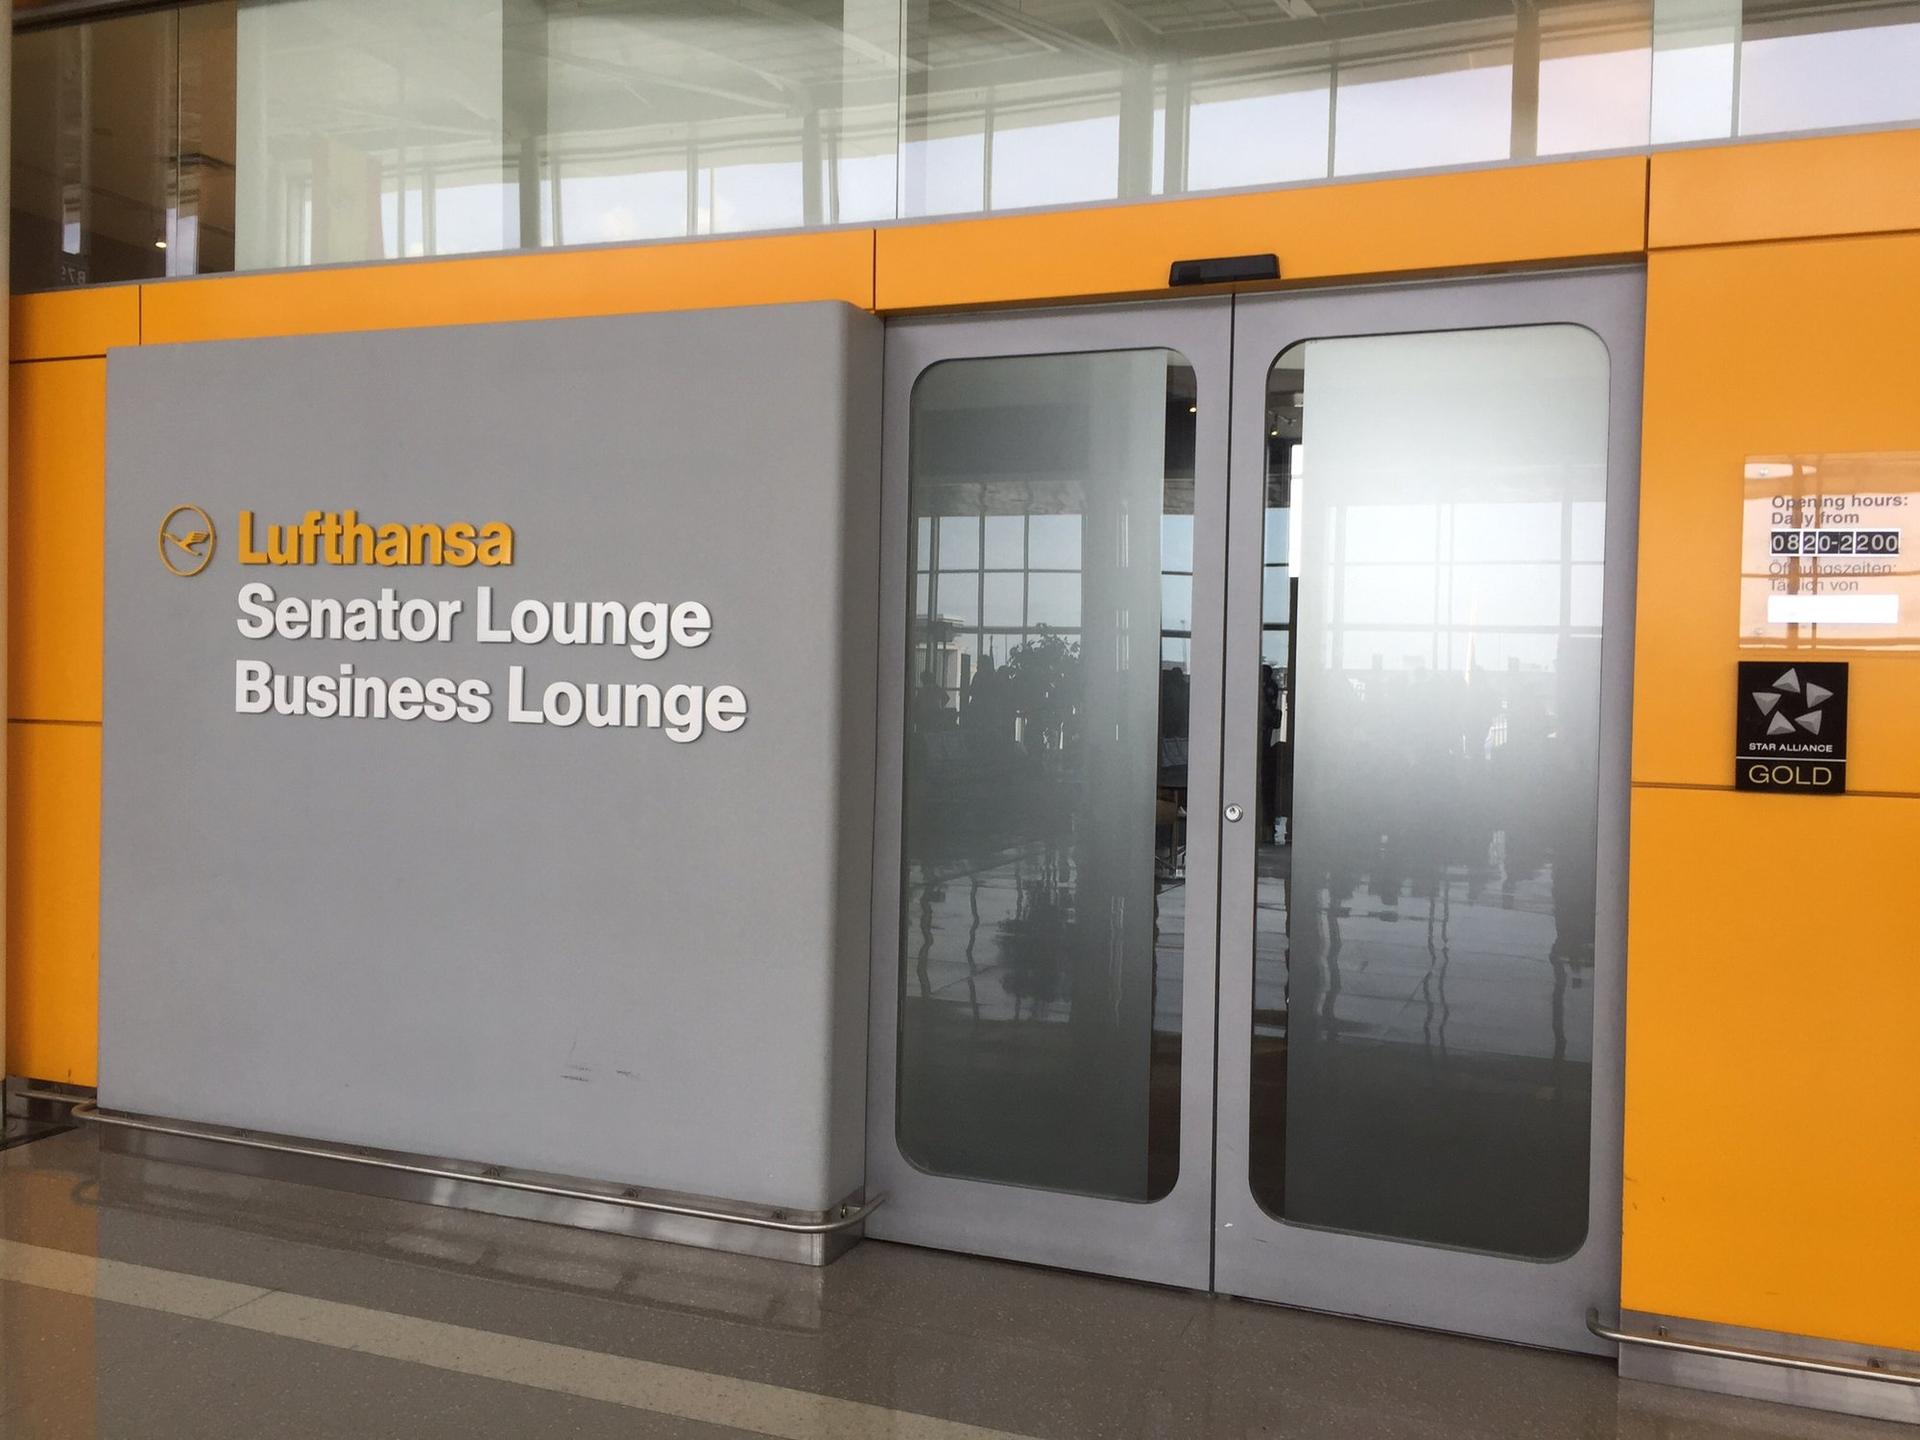 Lufthansa Business Lounge image 23 of 35